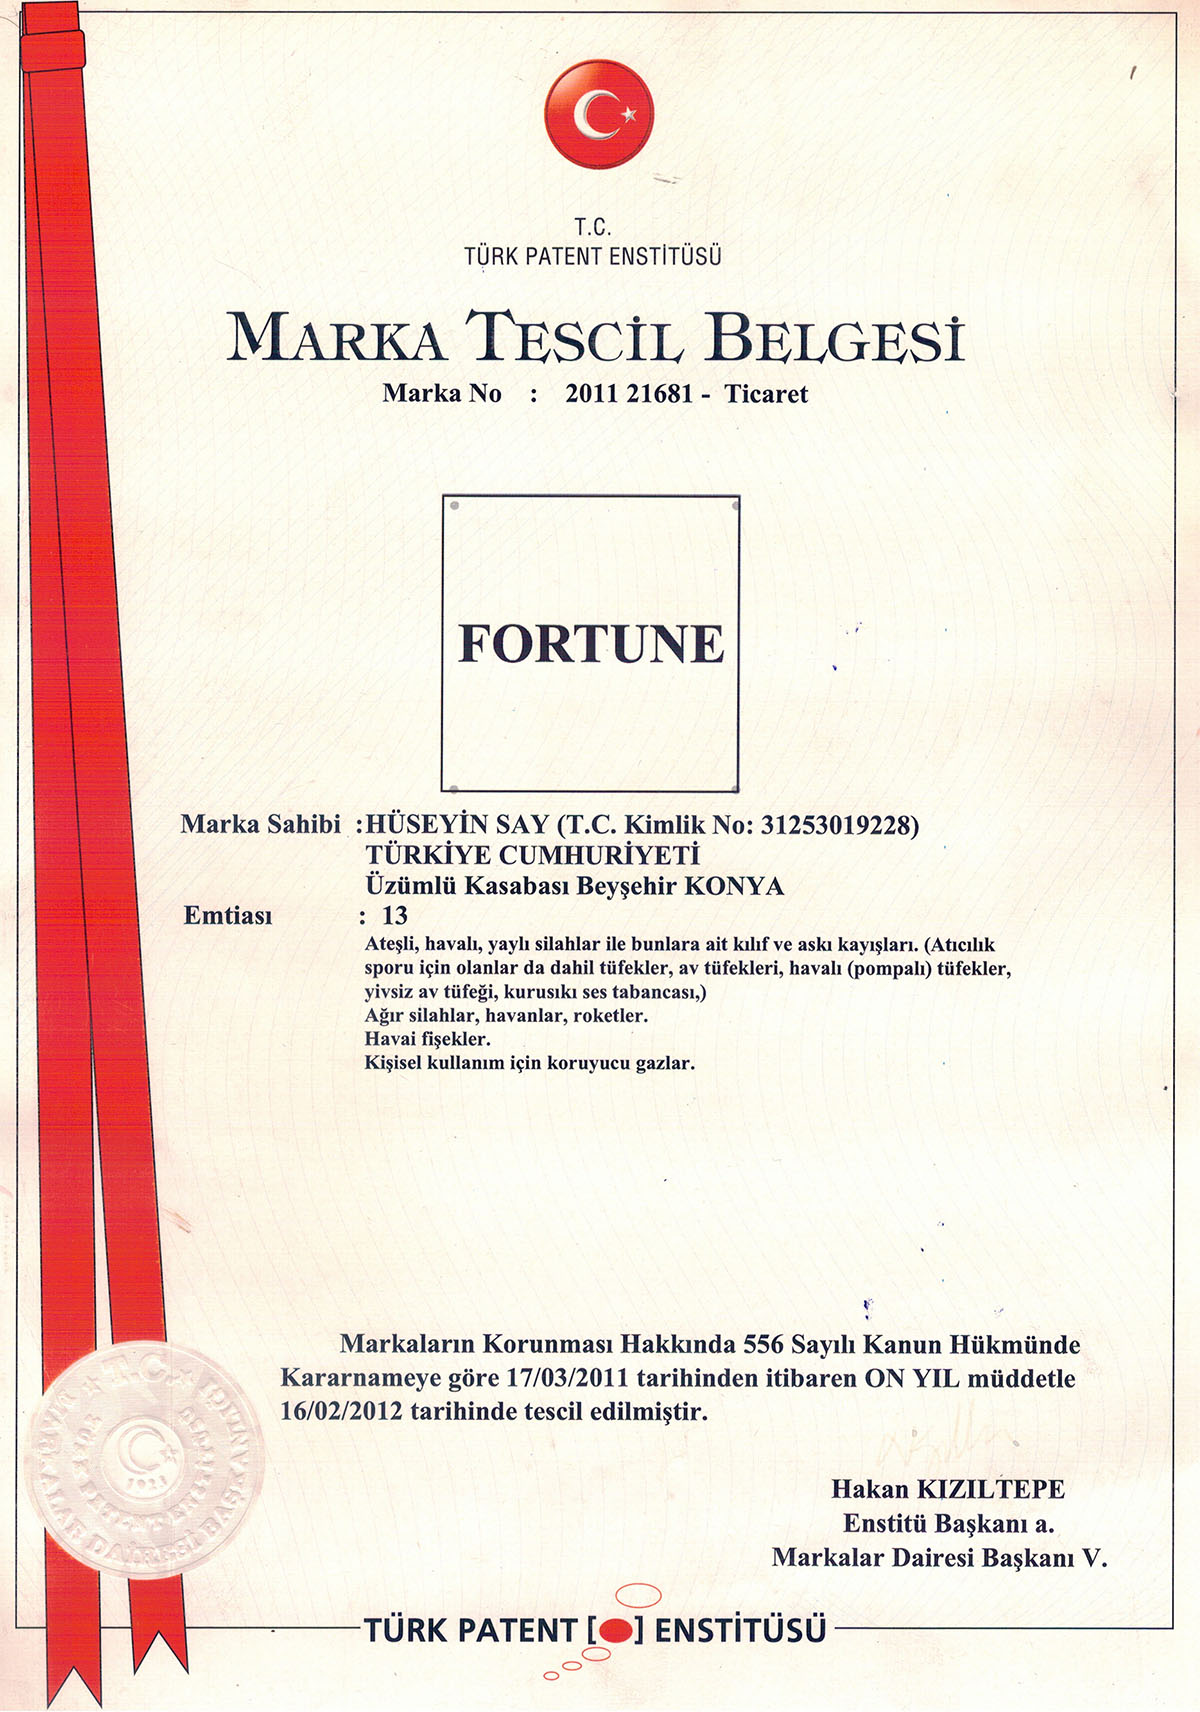 marka_tescil_belgesi_fortune